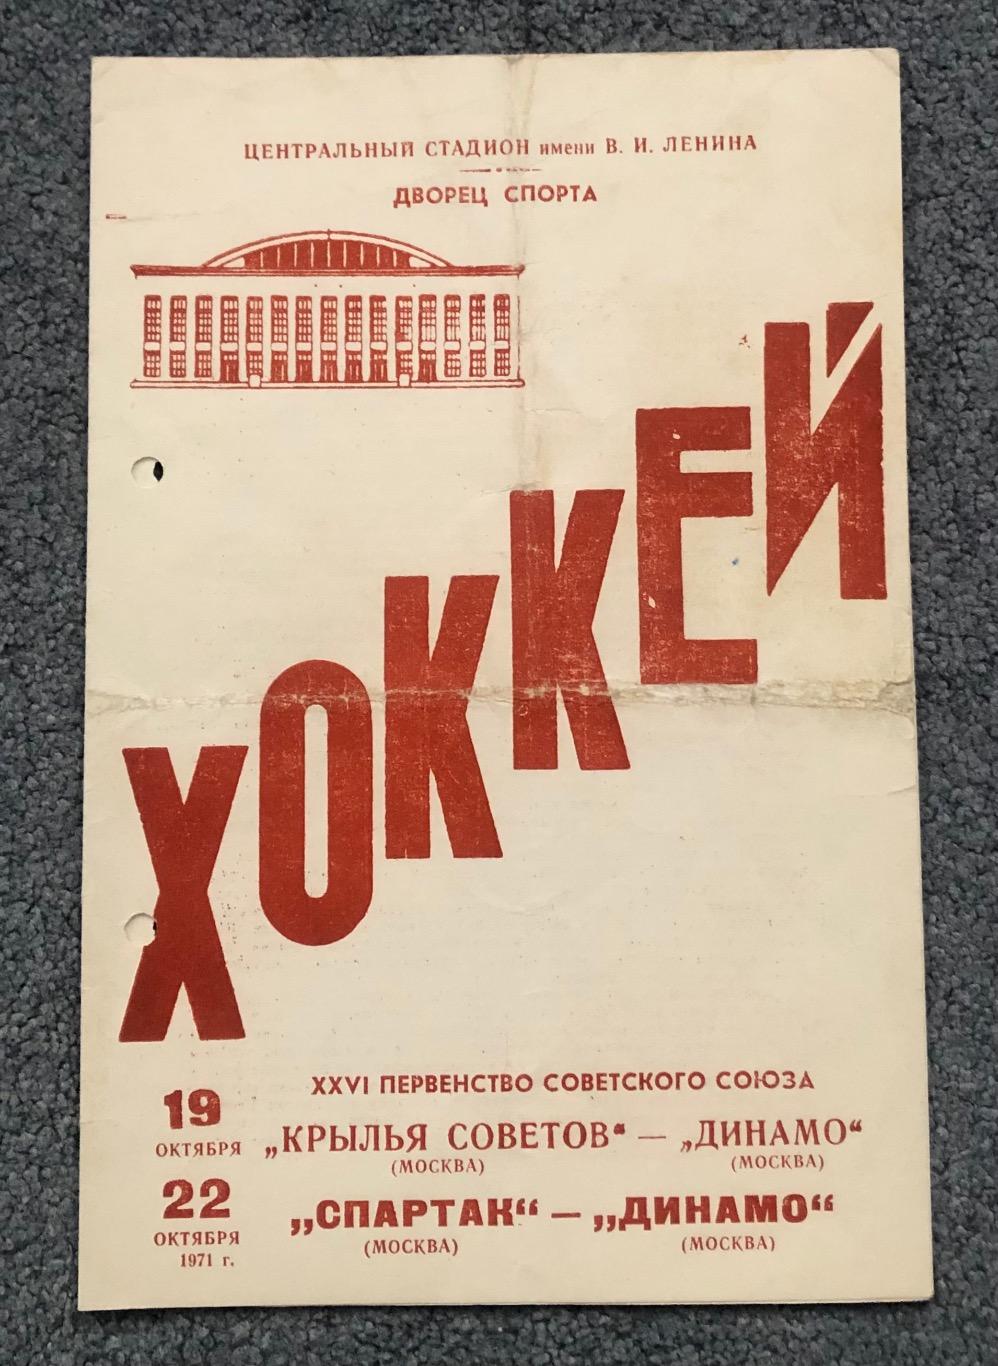 Крылья Советов - Динамо Москва, Спартак Москва - Динамо Москва, 19 и 22.10.1971